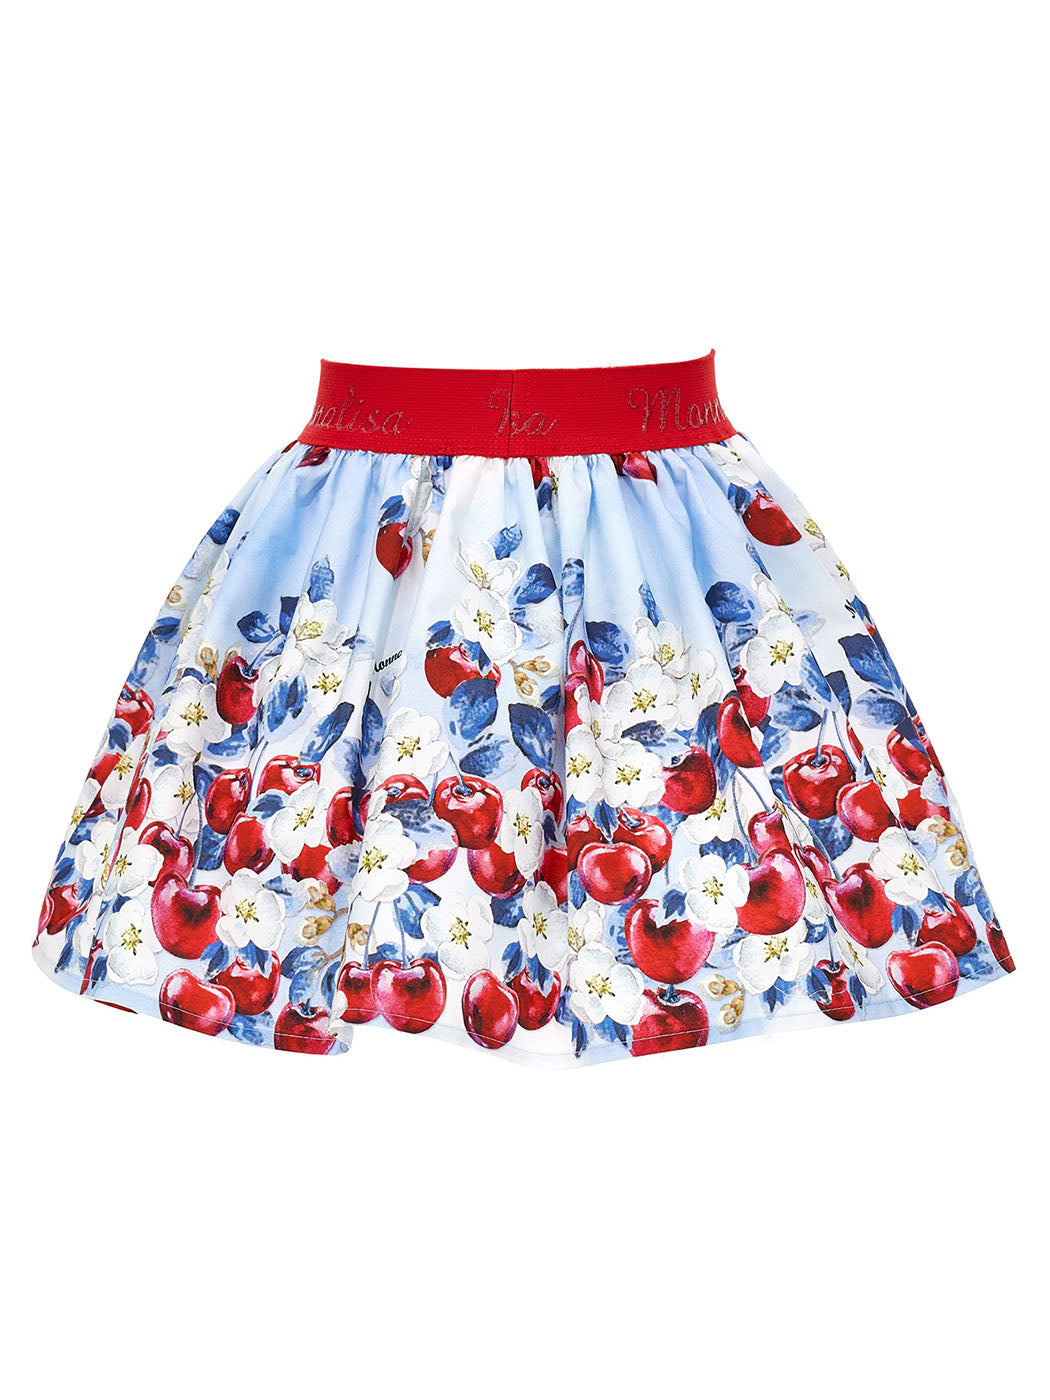 MONNALISA Cherry print cotton skirt